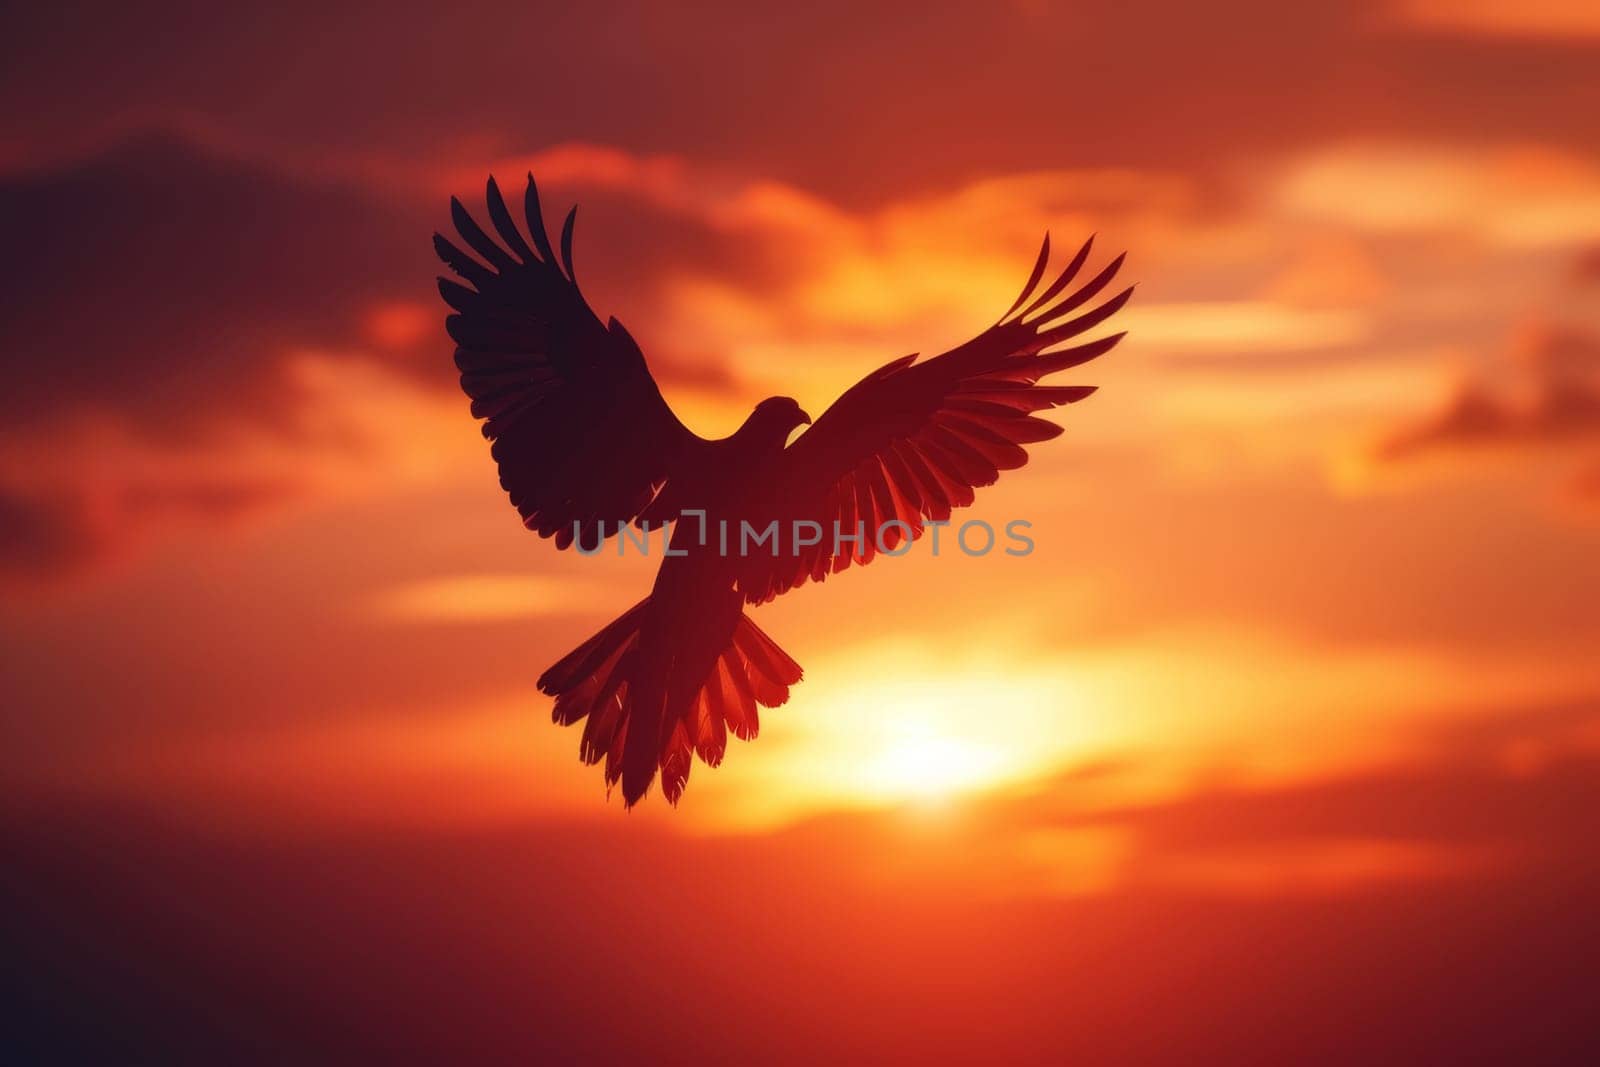 Sunrise Flight of the Phoenix by andreyz